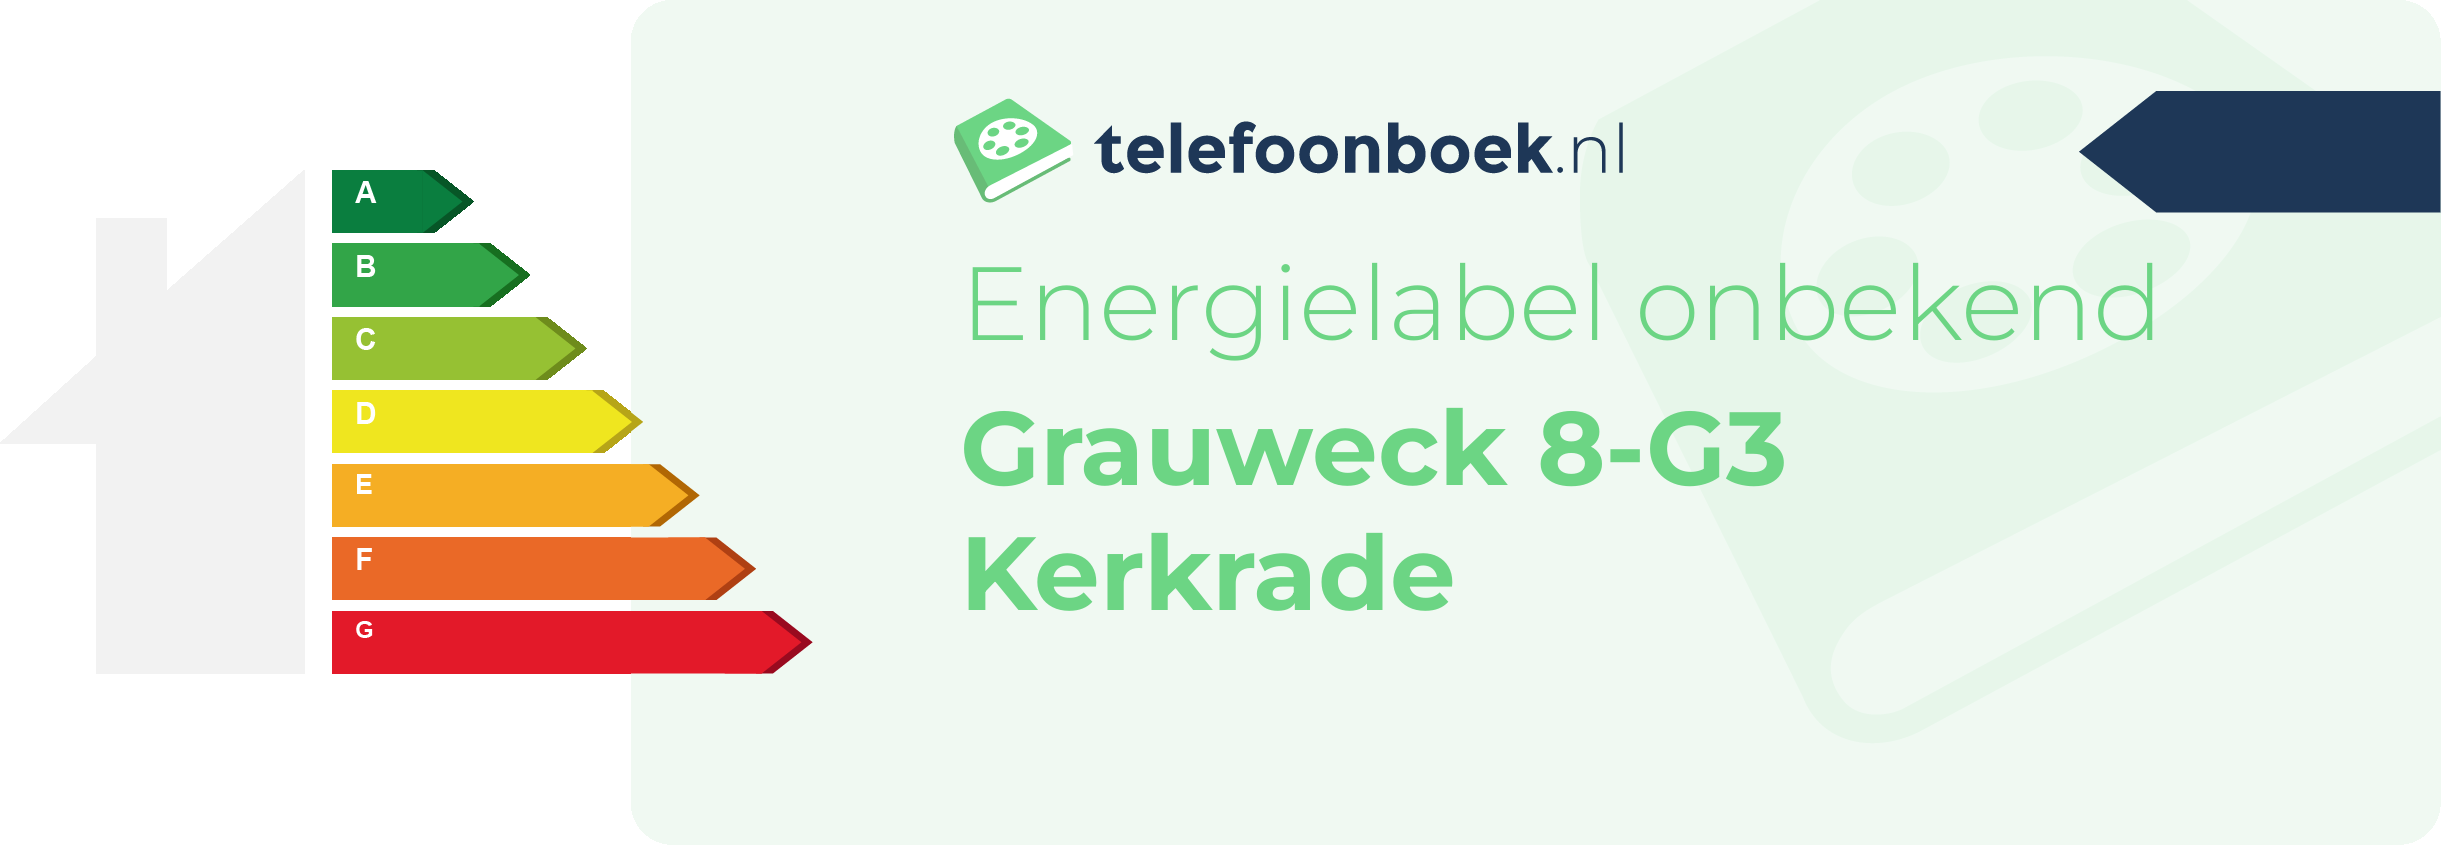 Energielabel Grauweck 8-G3 Kerkrade